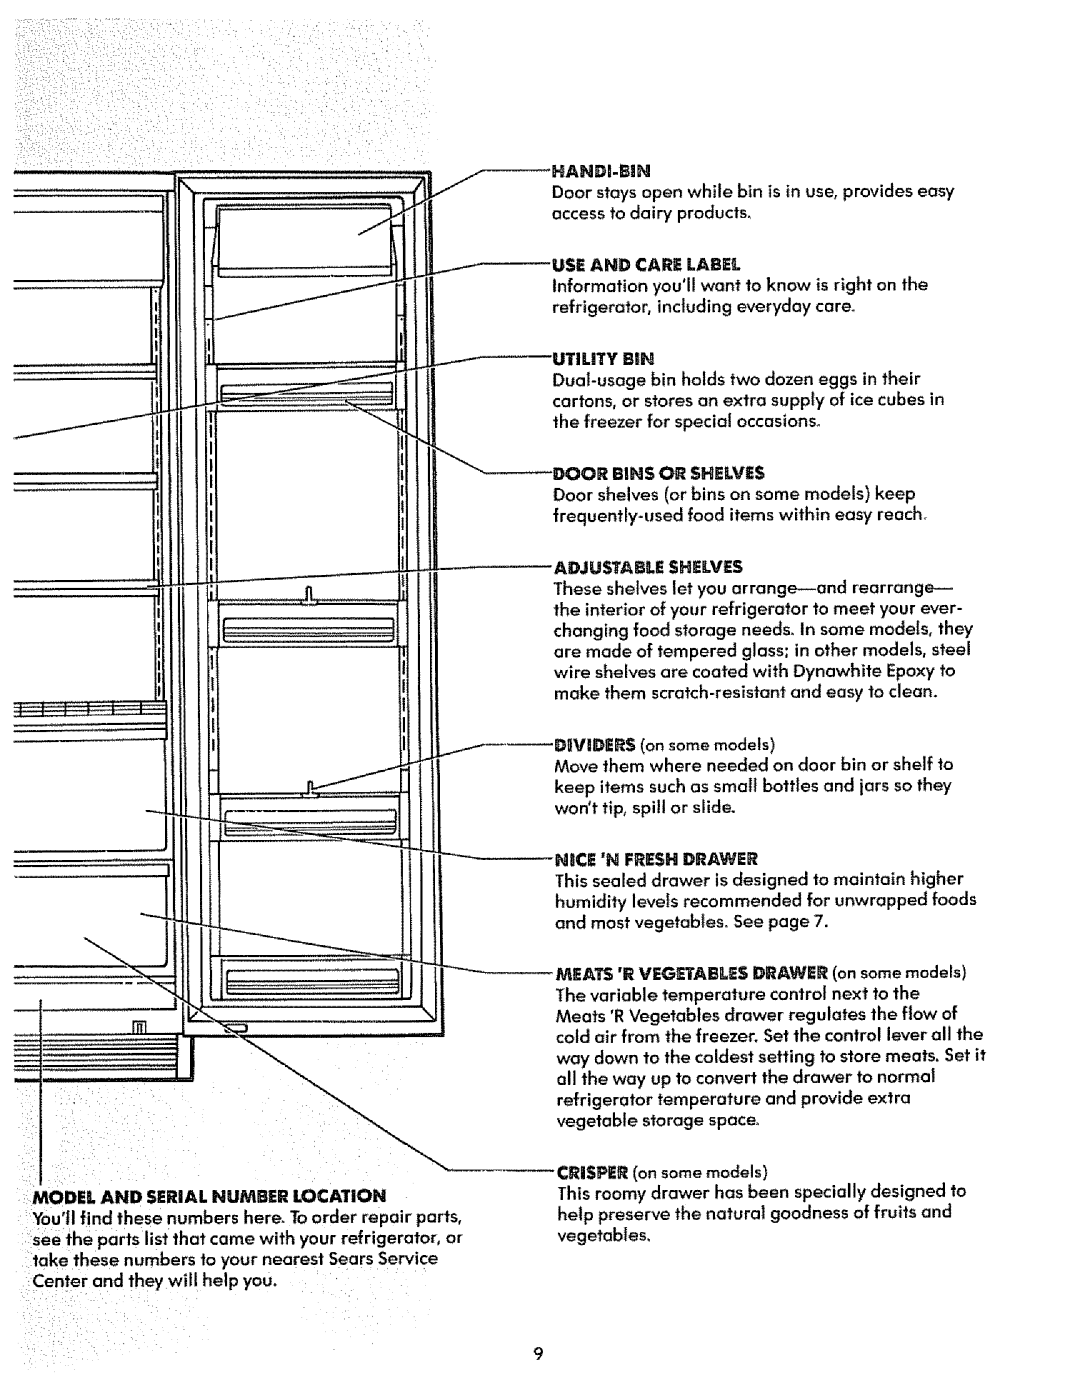 Sears 51271, 51278 manual Handi-Bin, Use And Cars Label 